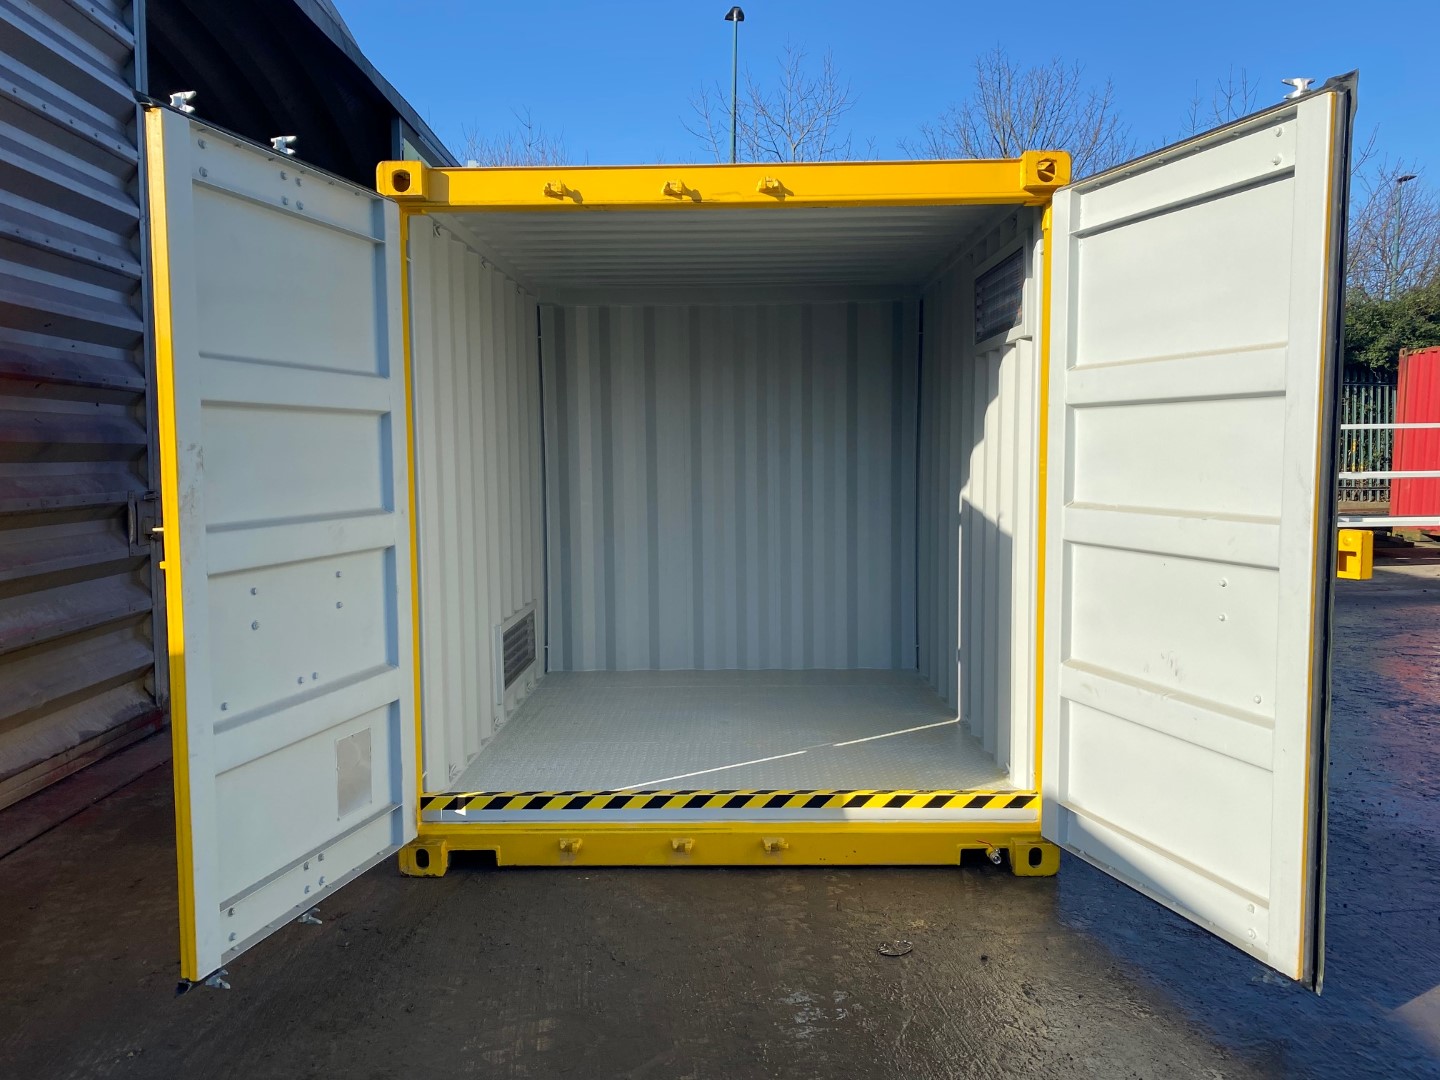 UK Providers of Hazardous Material Storage Solutions